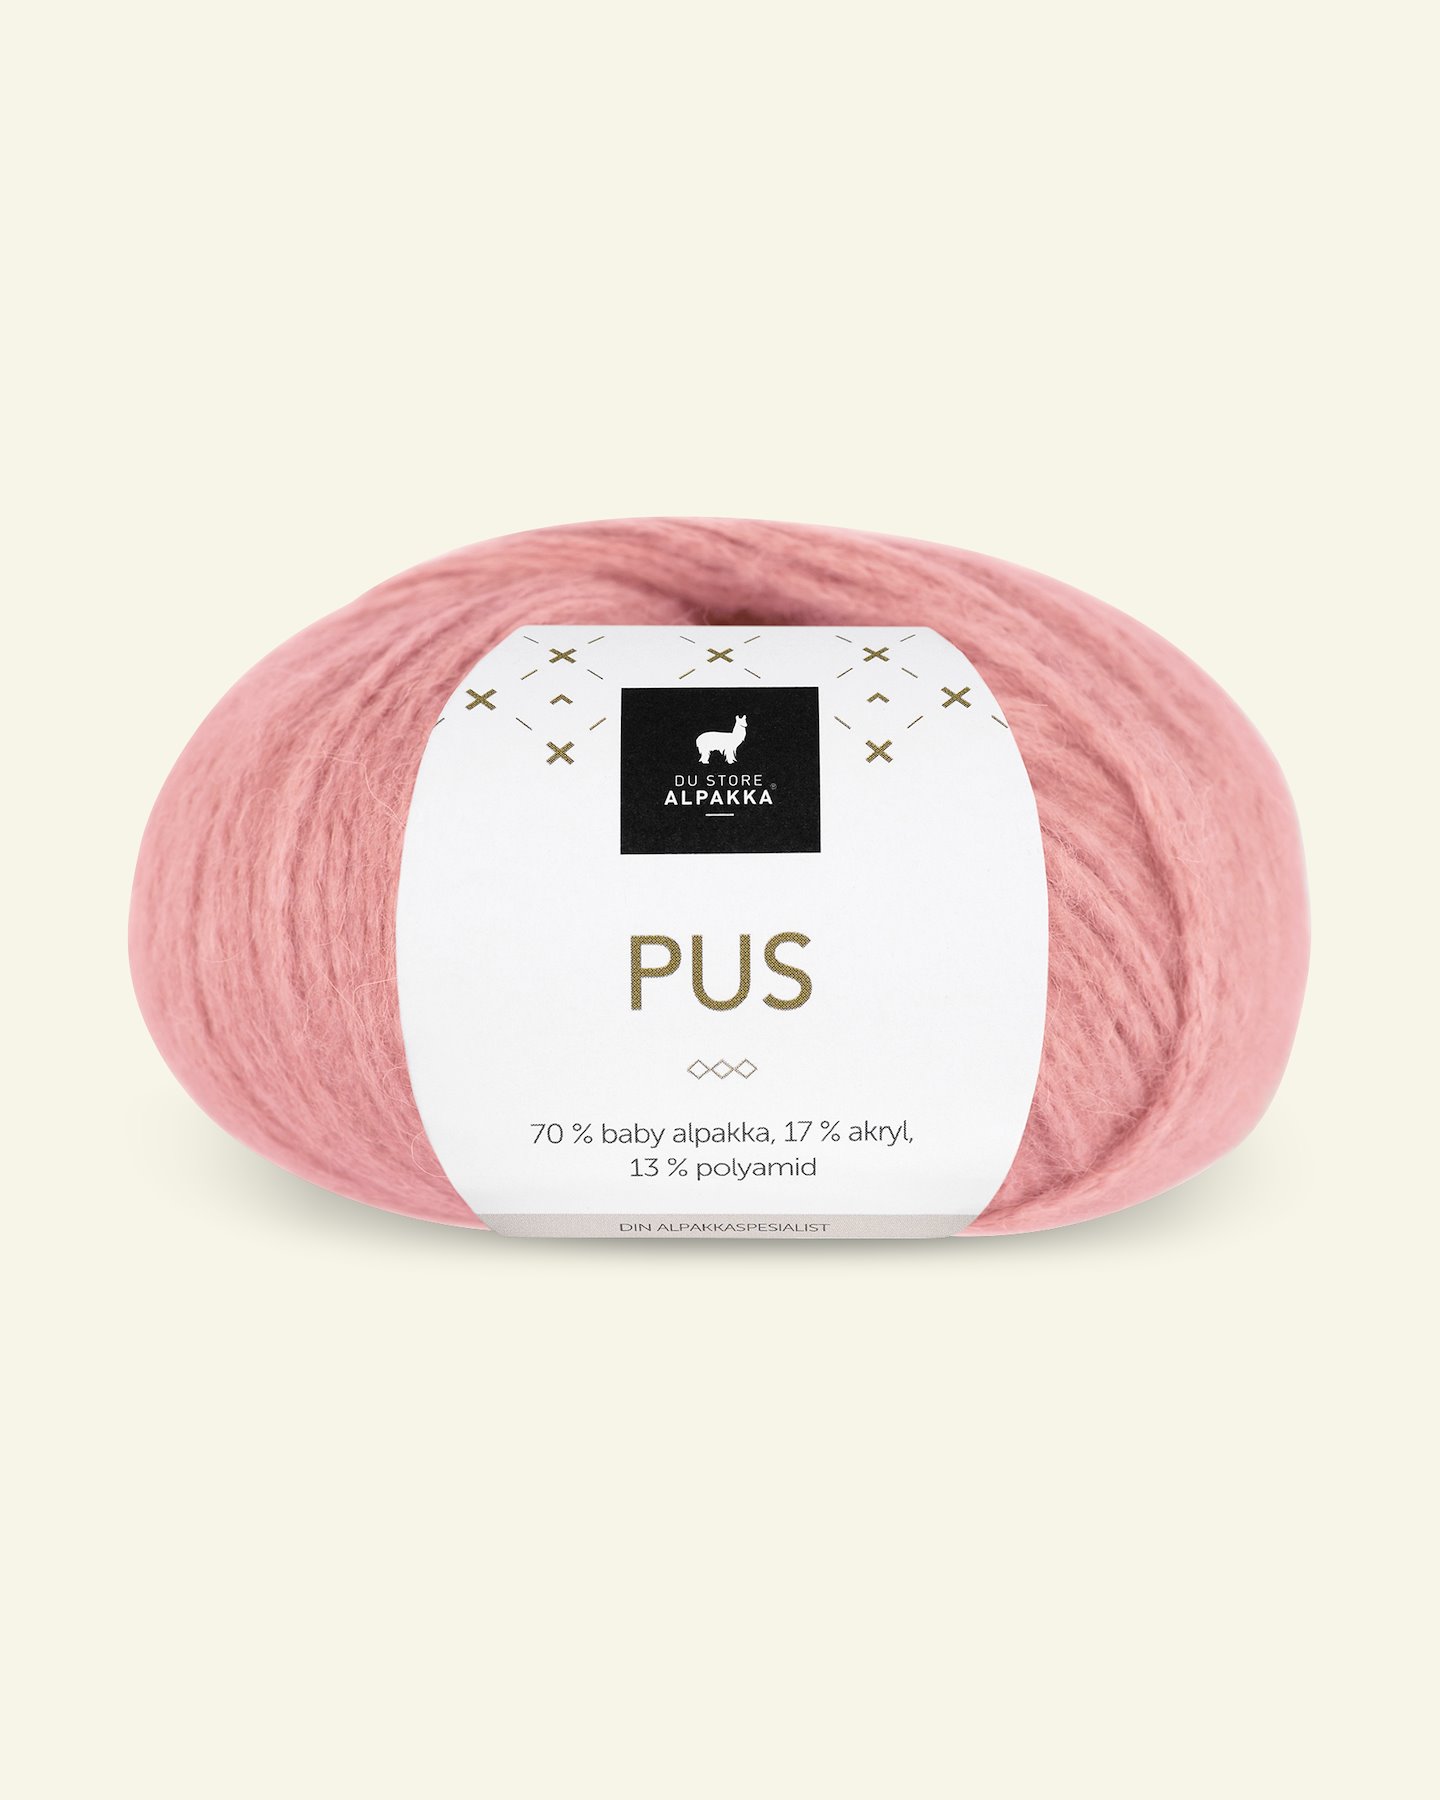 Du Store Alpakka, alpaca mixgarn "Pus", rosa (4036) 90000728_pack